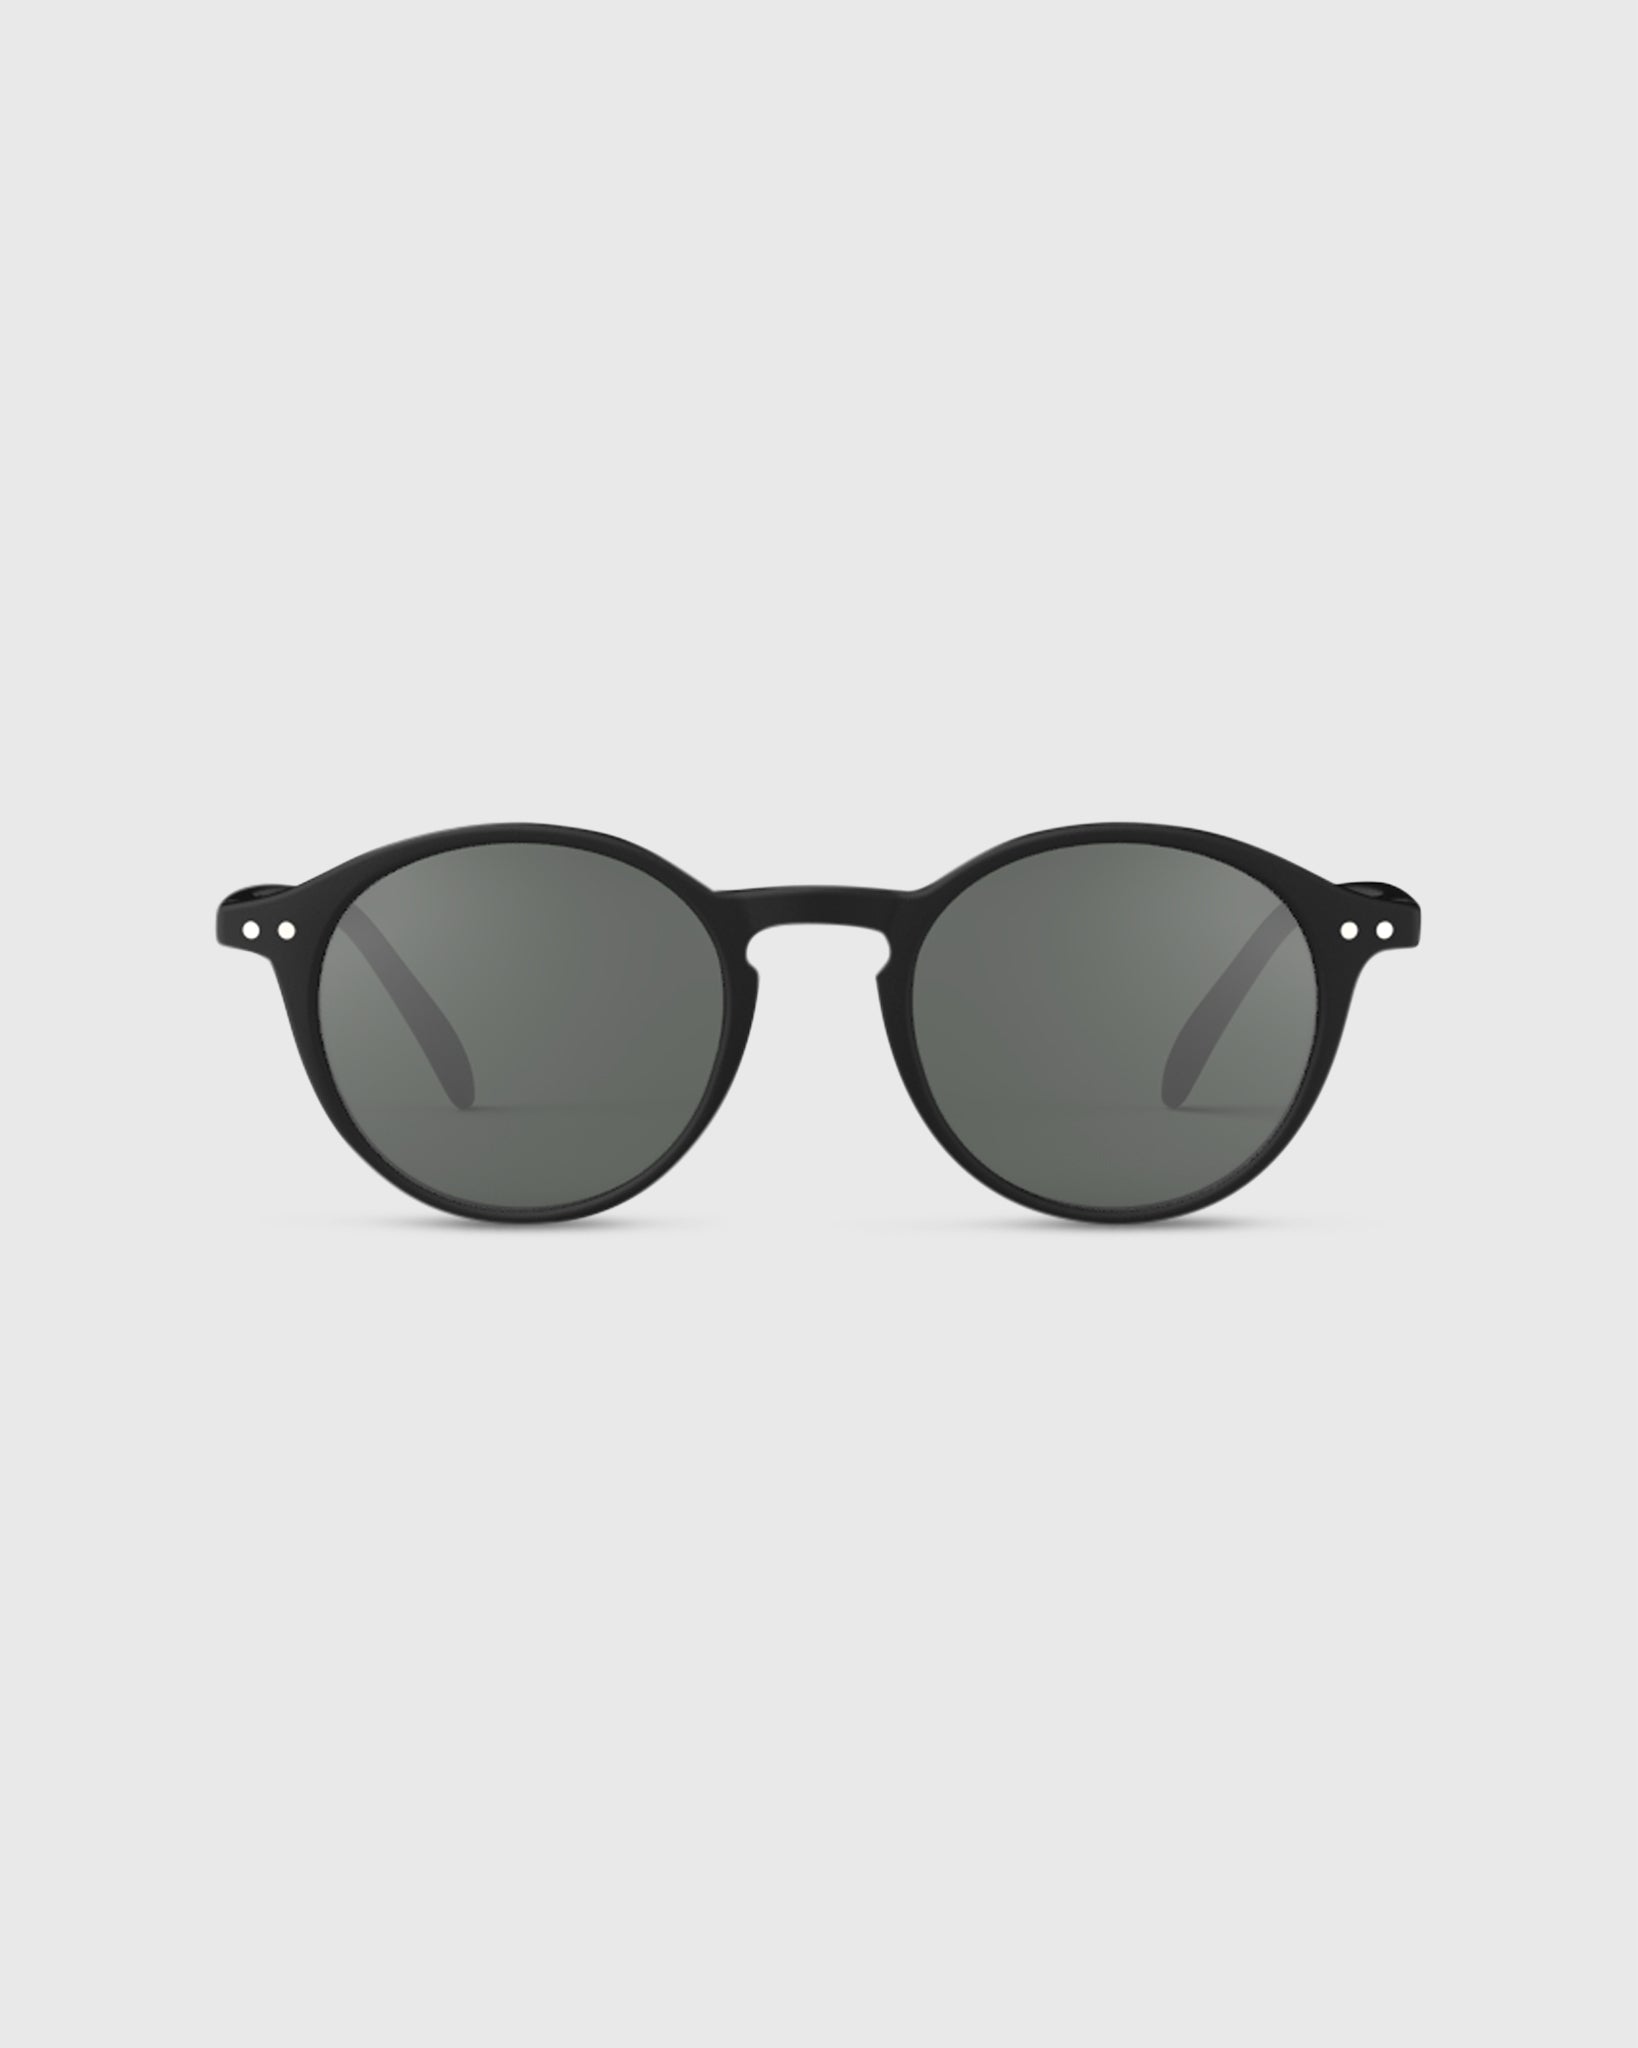 #D Sunglasses in Black